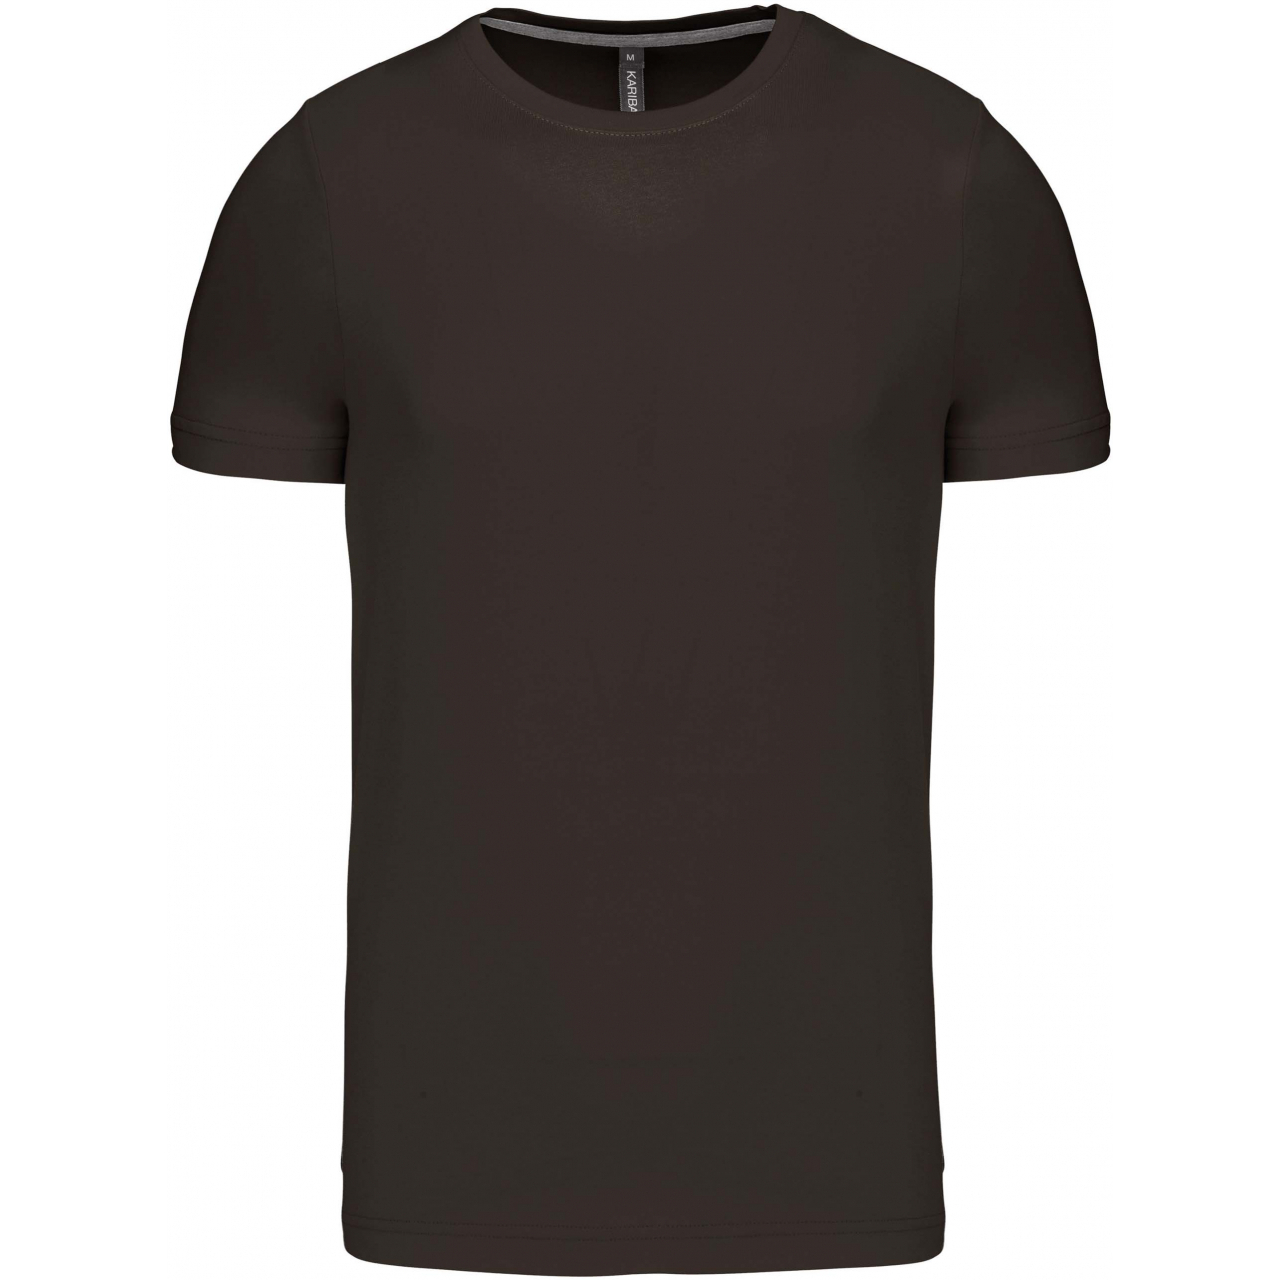 Pánské tričko Kariban krátký rukáv - tmavé khaki, S